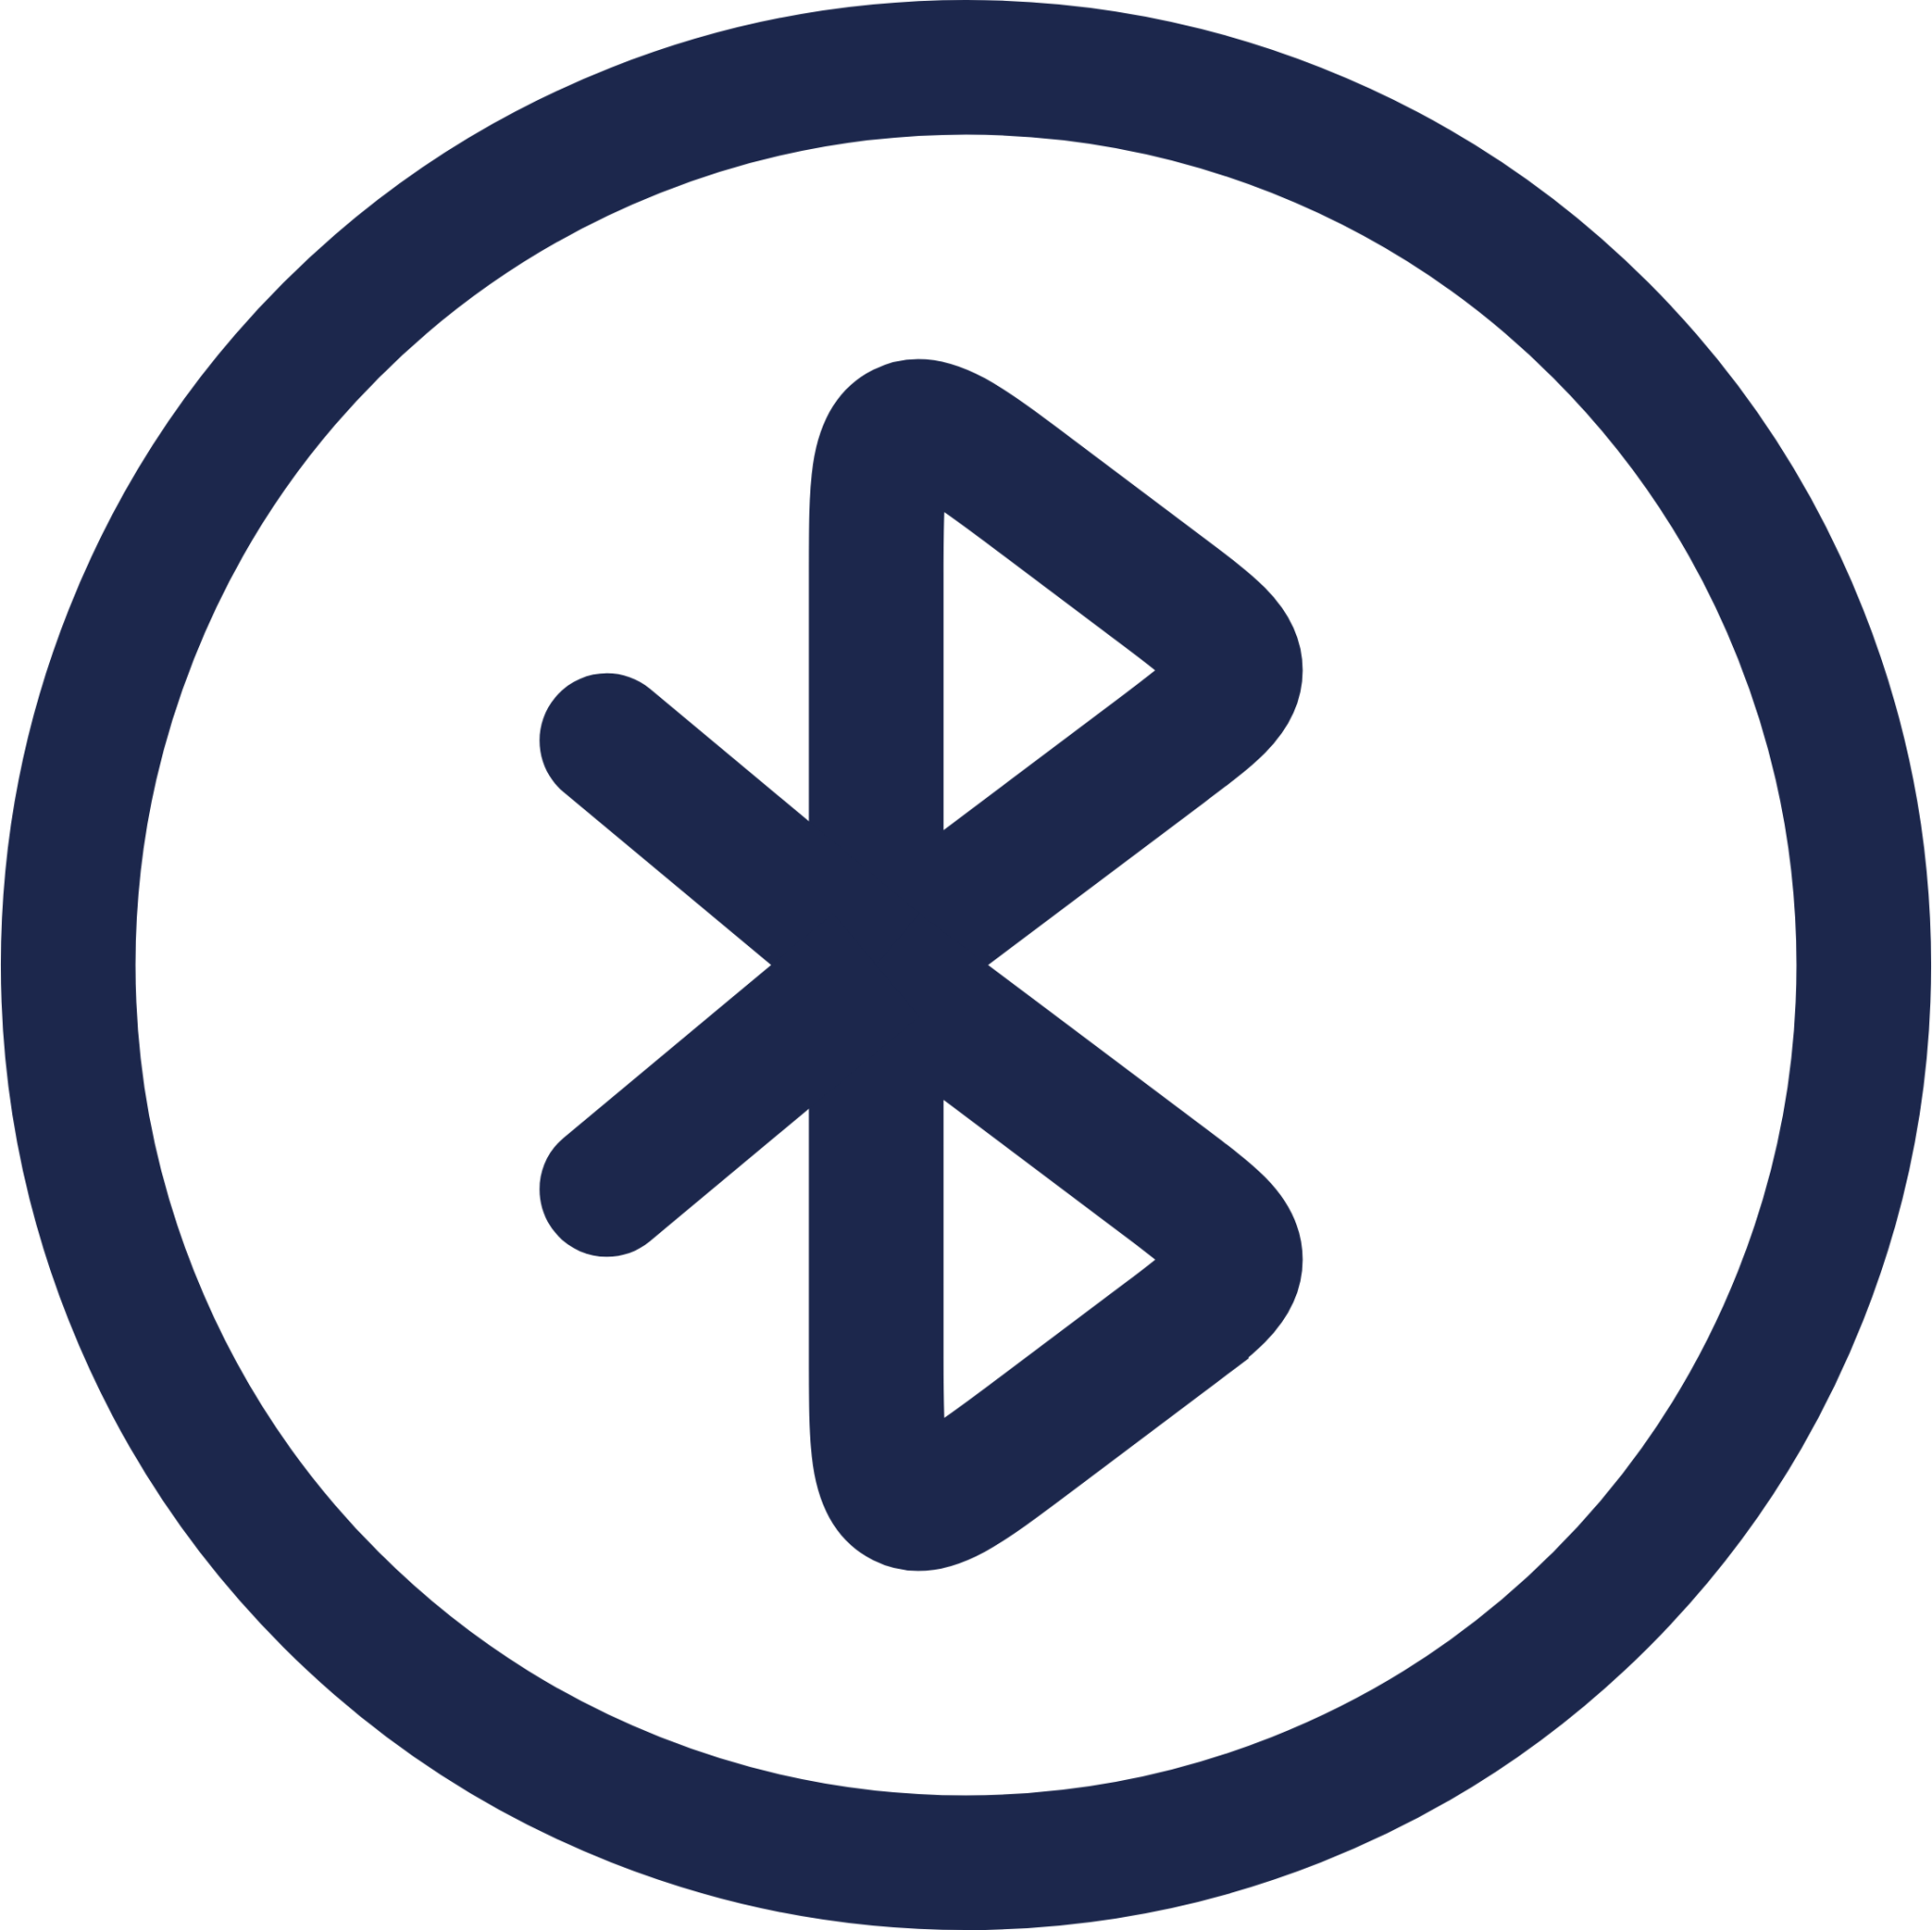 Bluetooth Circle icon